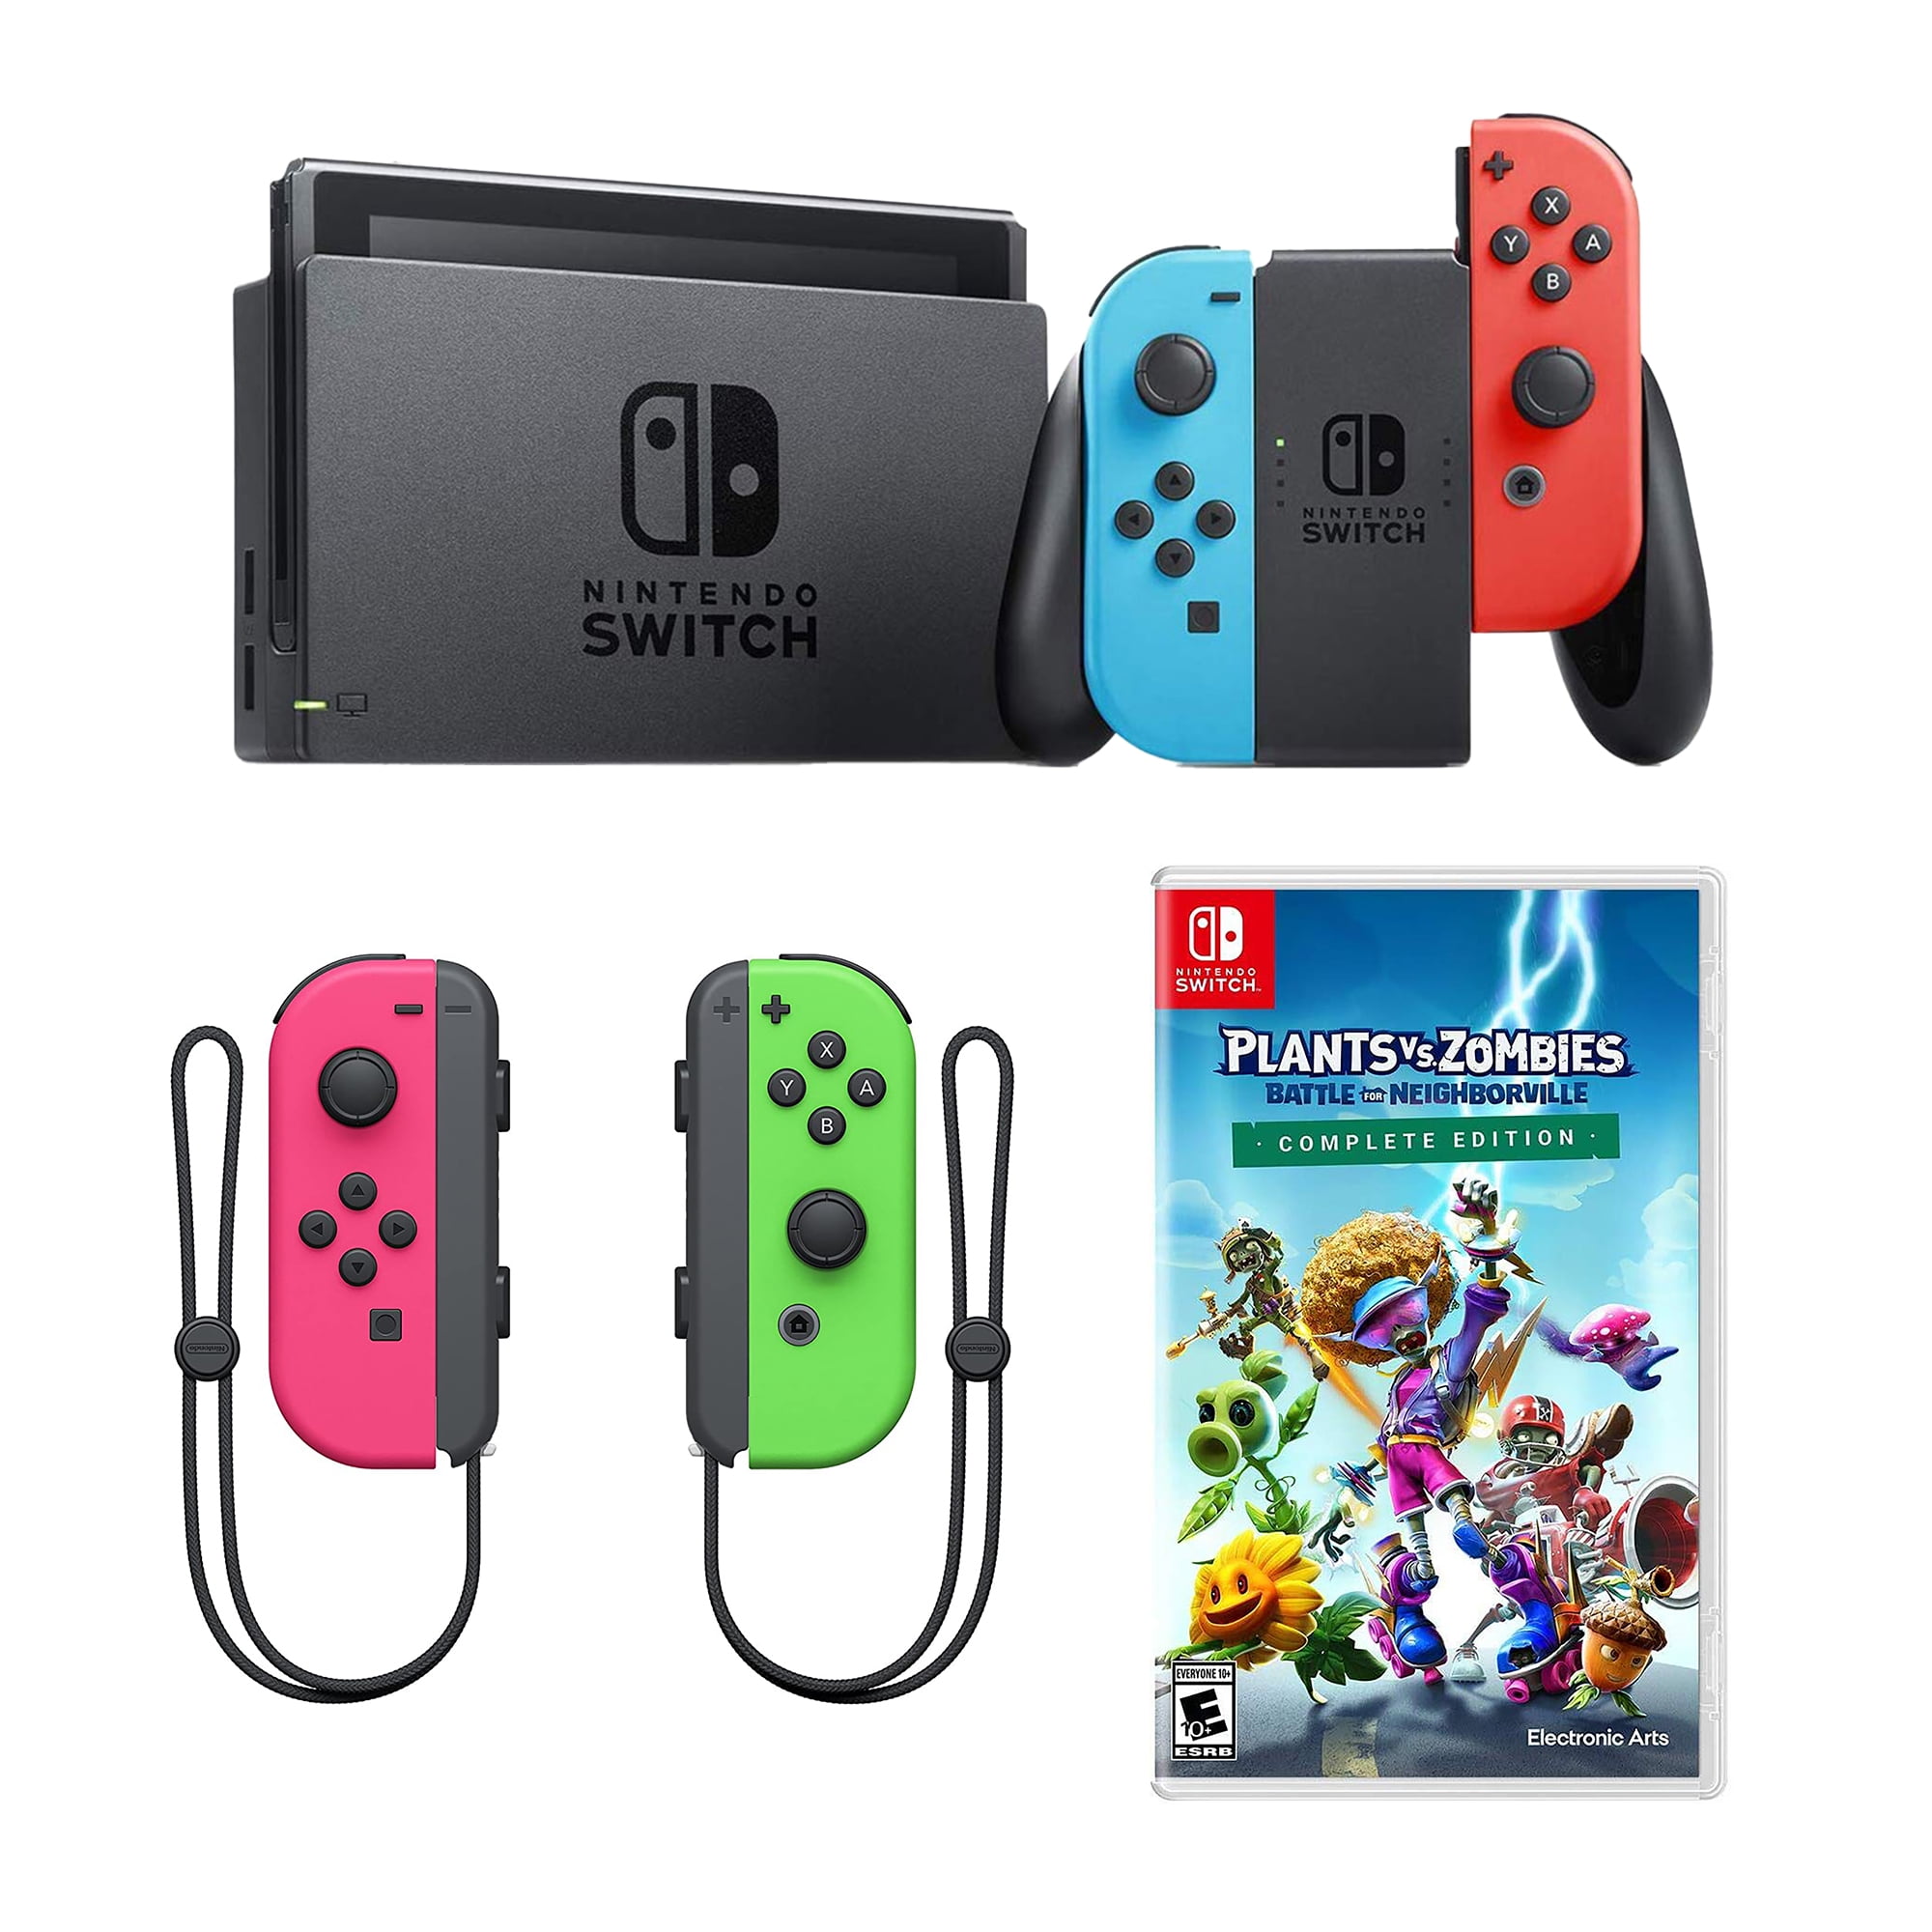 Nintendo Switch Nintendo Switch Console & Red Joy-Con + Pink & Green Joy-Con Controllers + vs. Zombies Nintendo Switch - Walmart.com